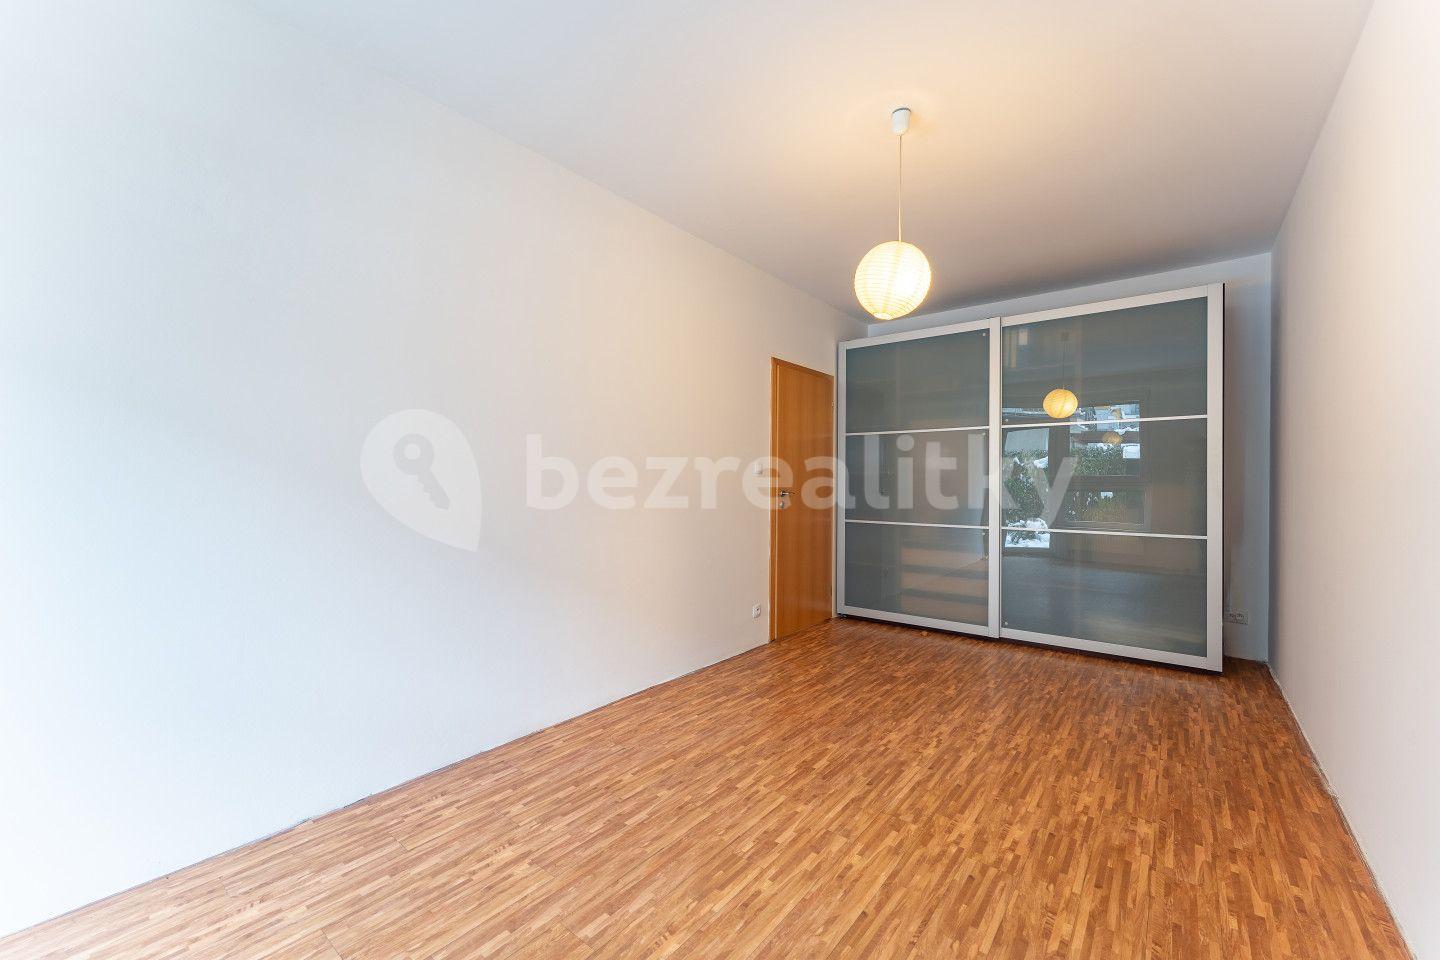 1 bedroom with open-plan kitchen flat for sale, 54 m², Pod Harfou, Prague, Prague